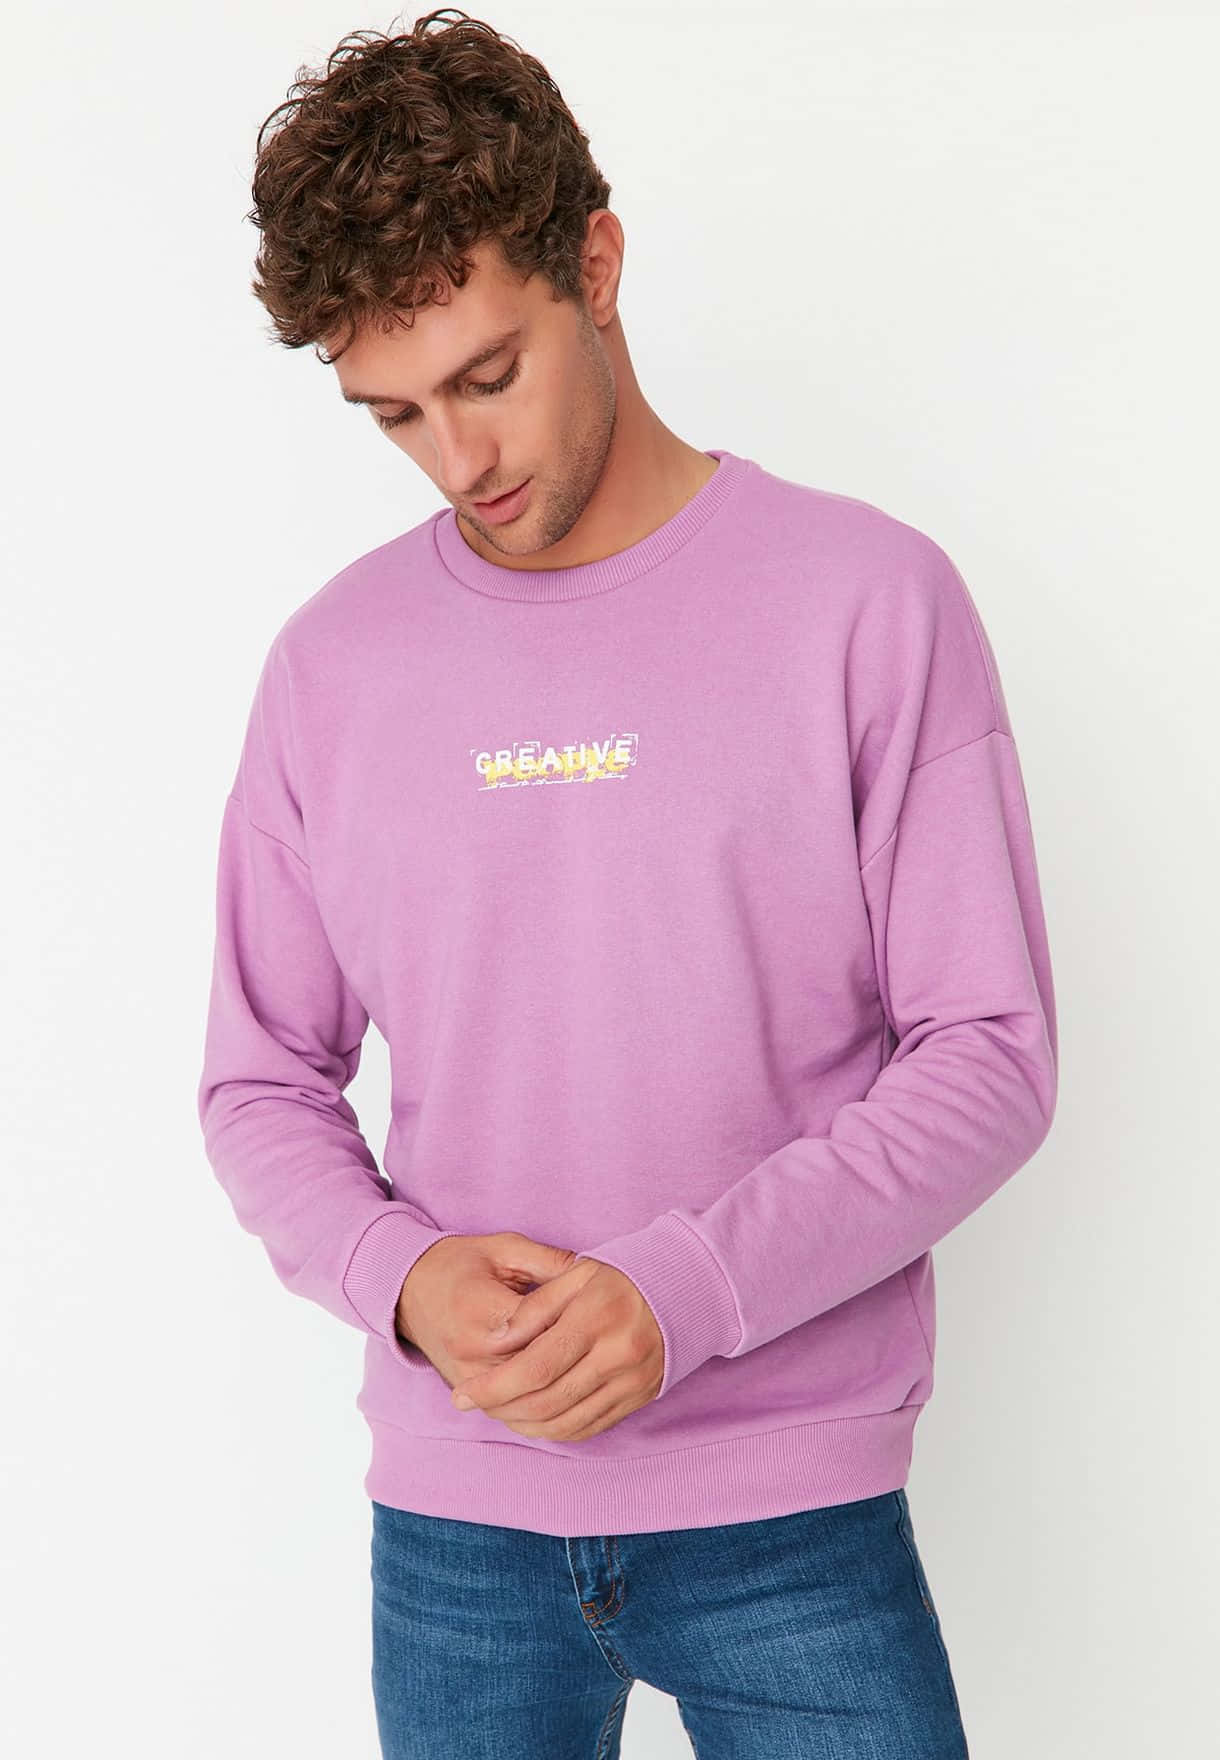 Look and Feel Your Best In This Trendy Purple Sweatshirt Wallpaper